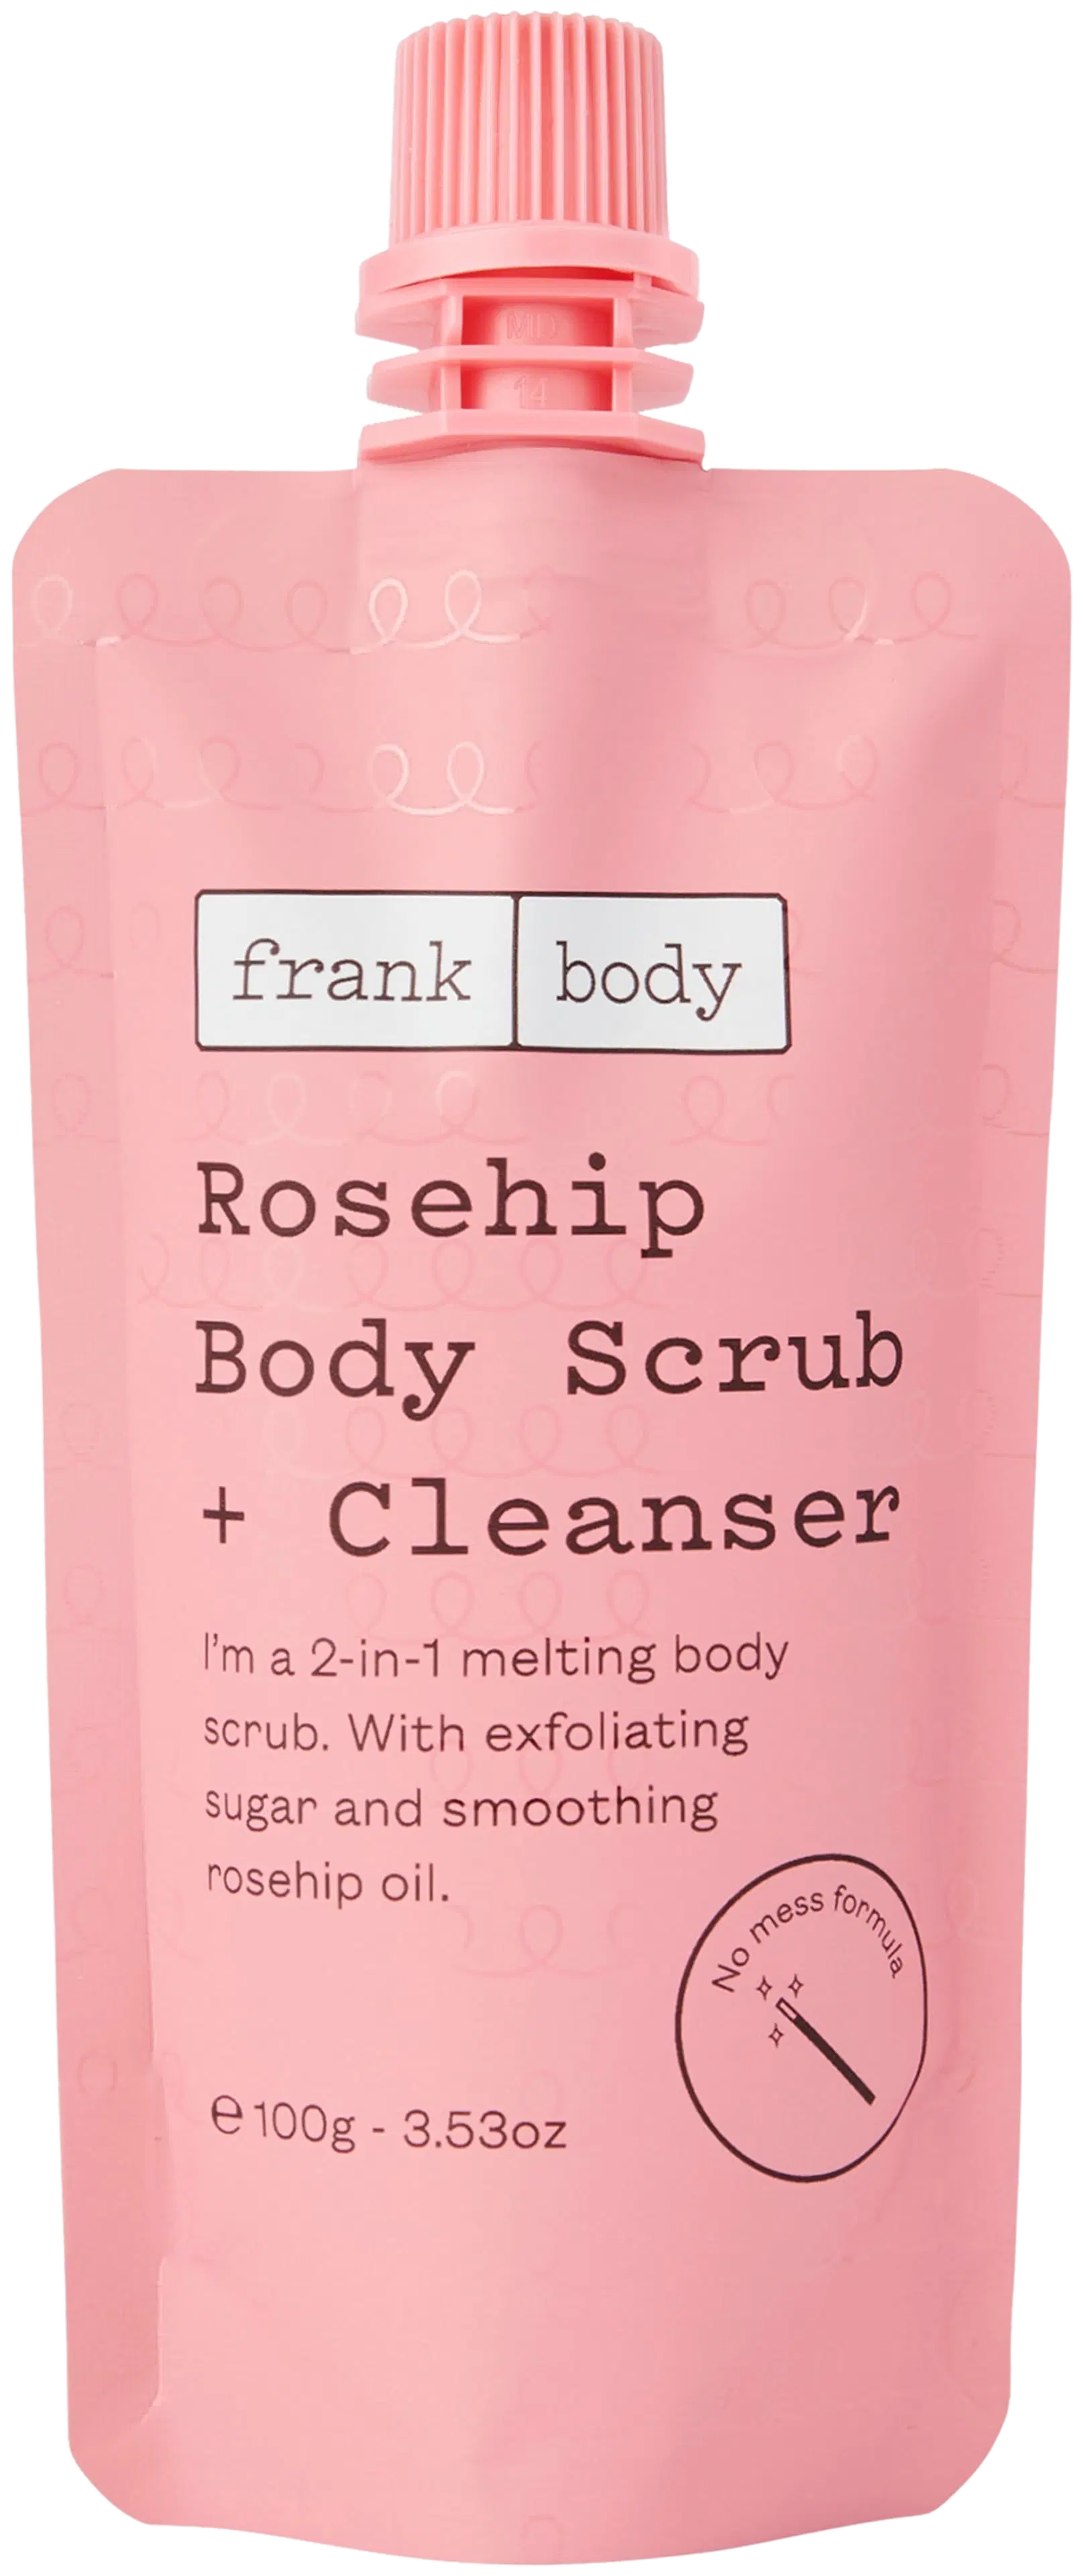 Frank Body Rosehip Body Scrub + Cleanser varatalokuorinta 100g